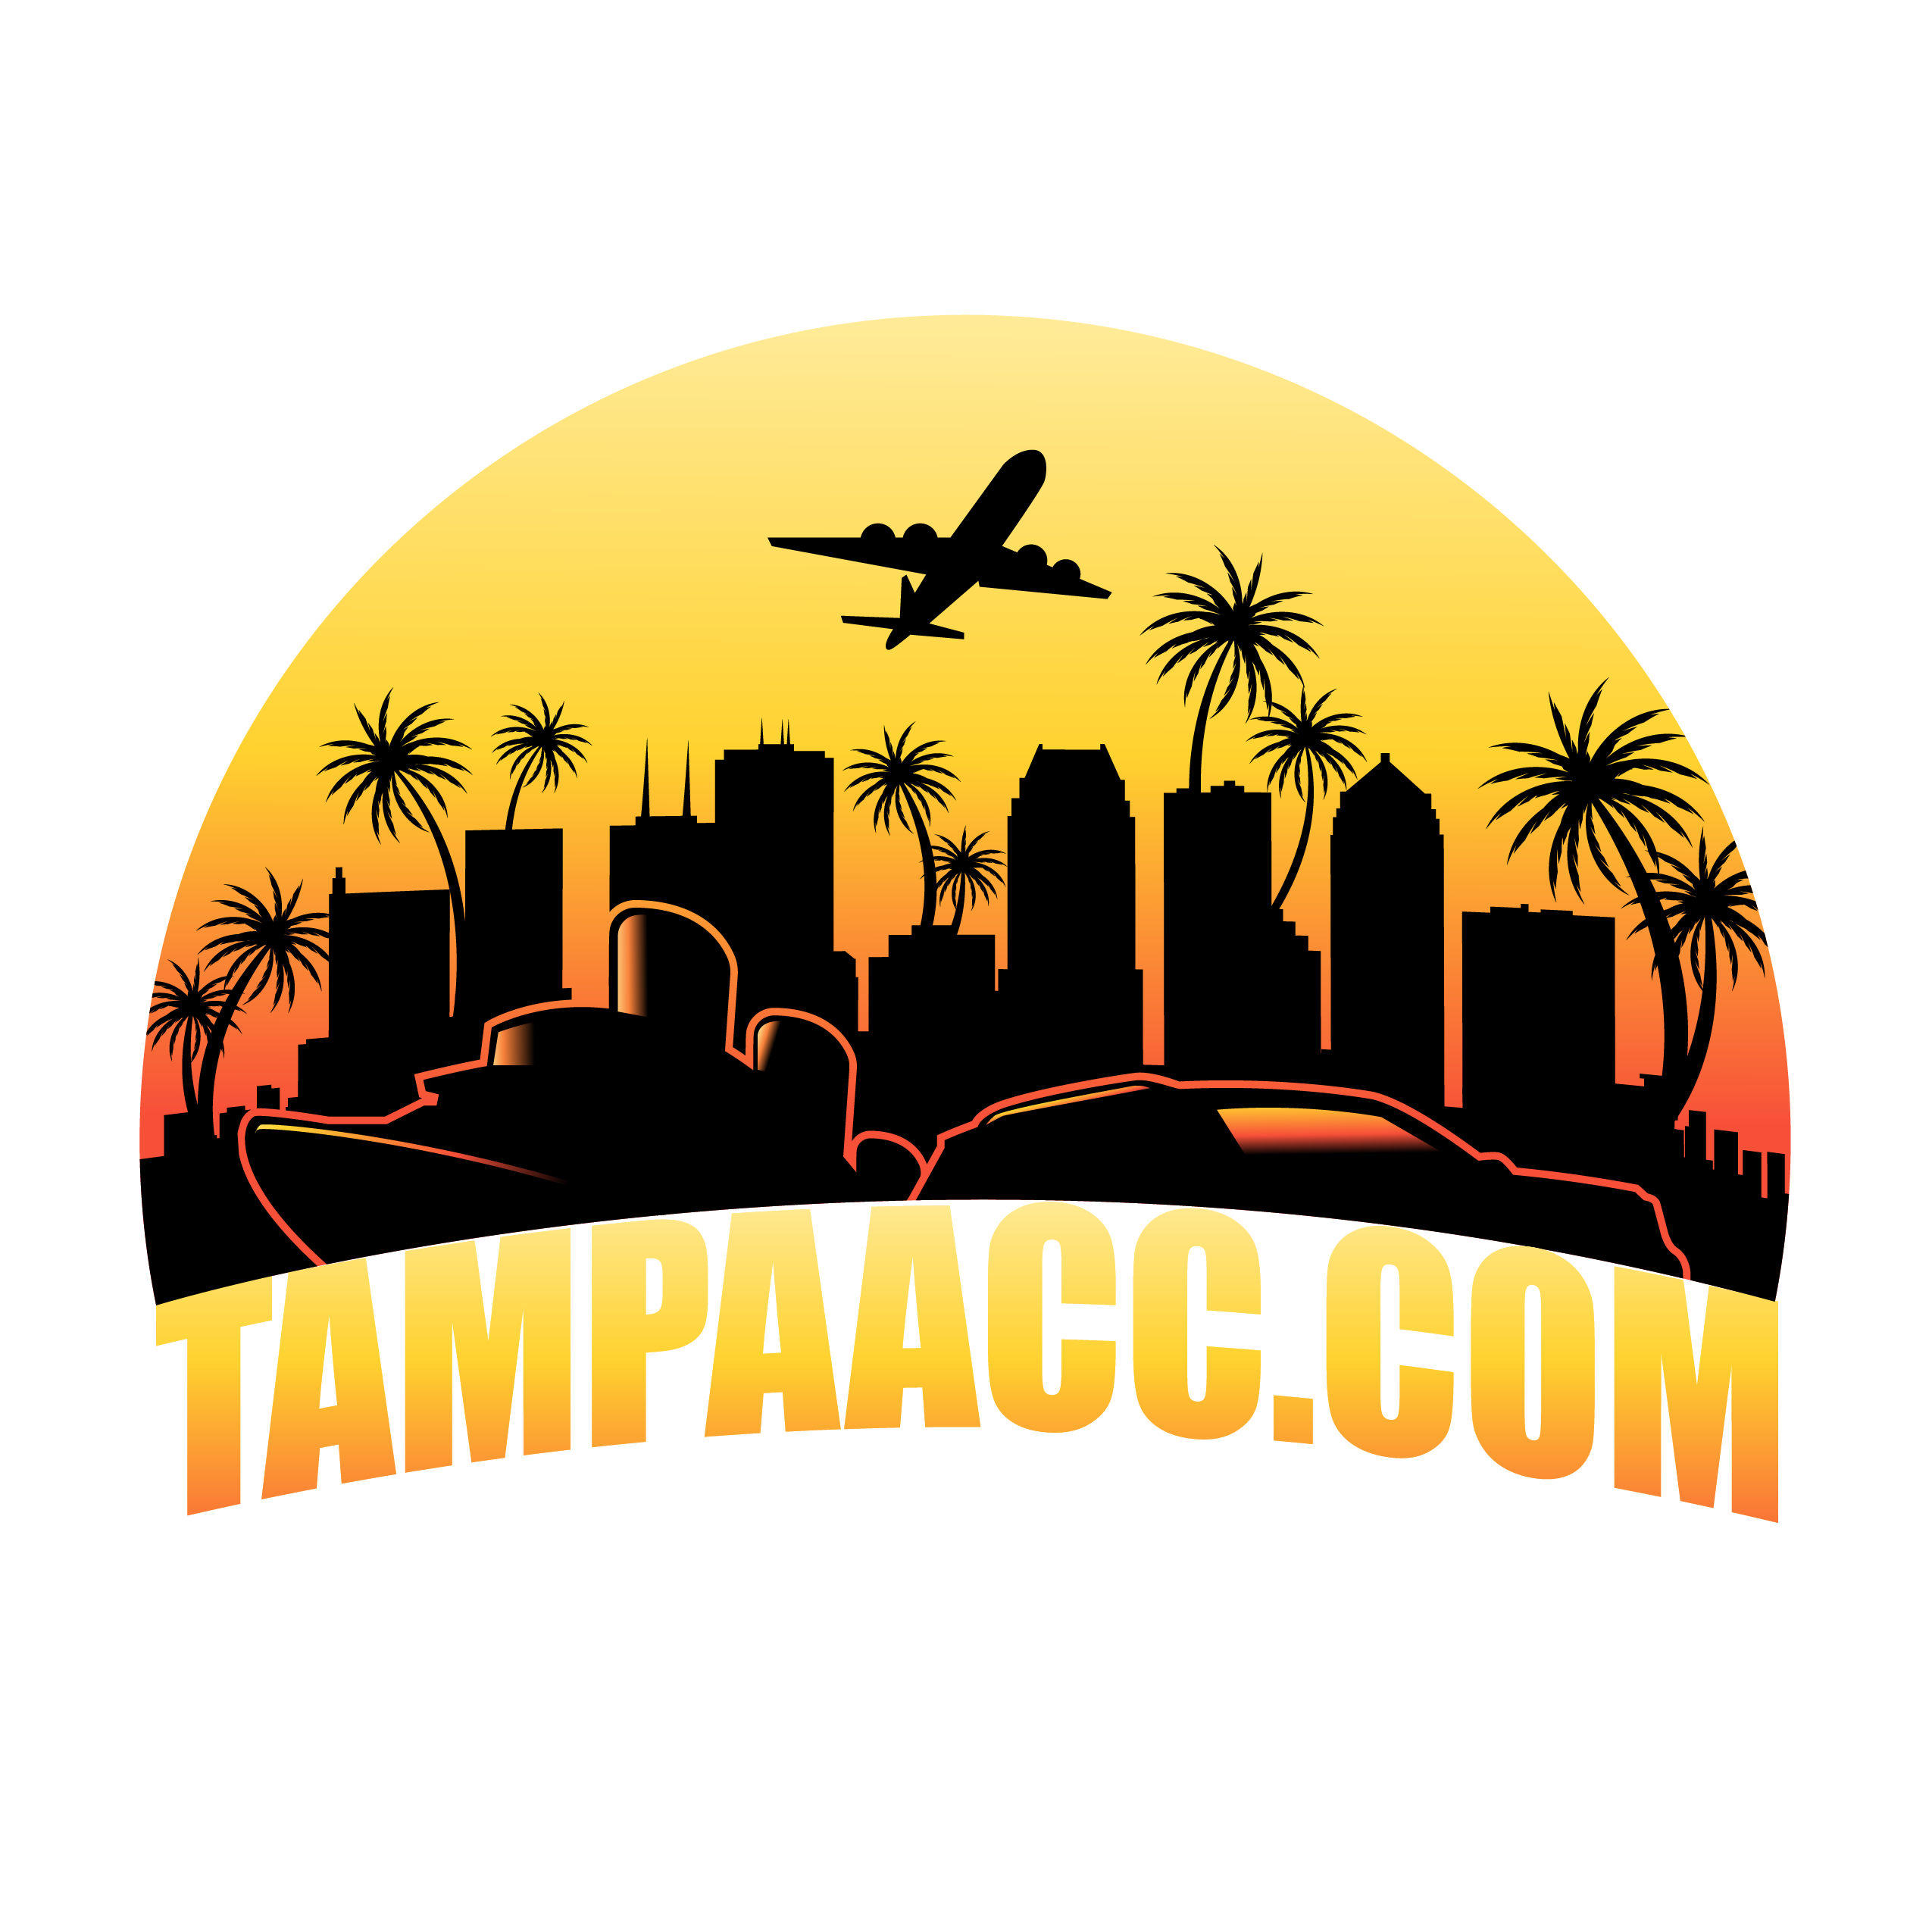 Tampaacc.com